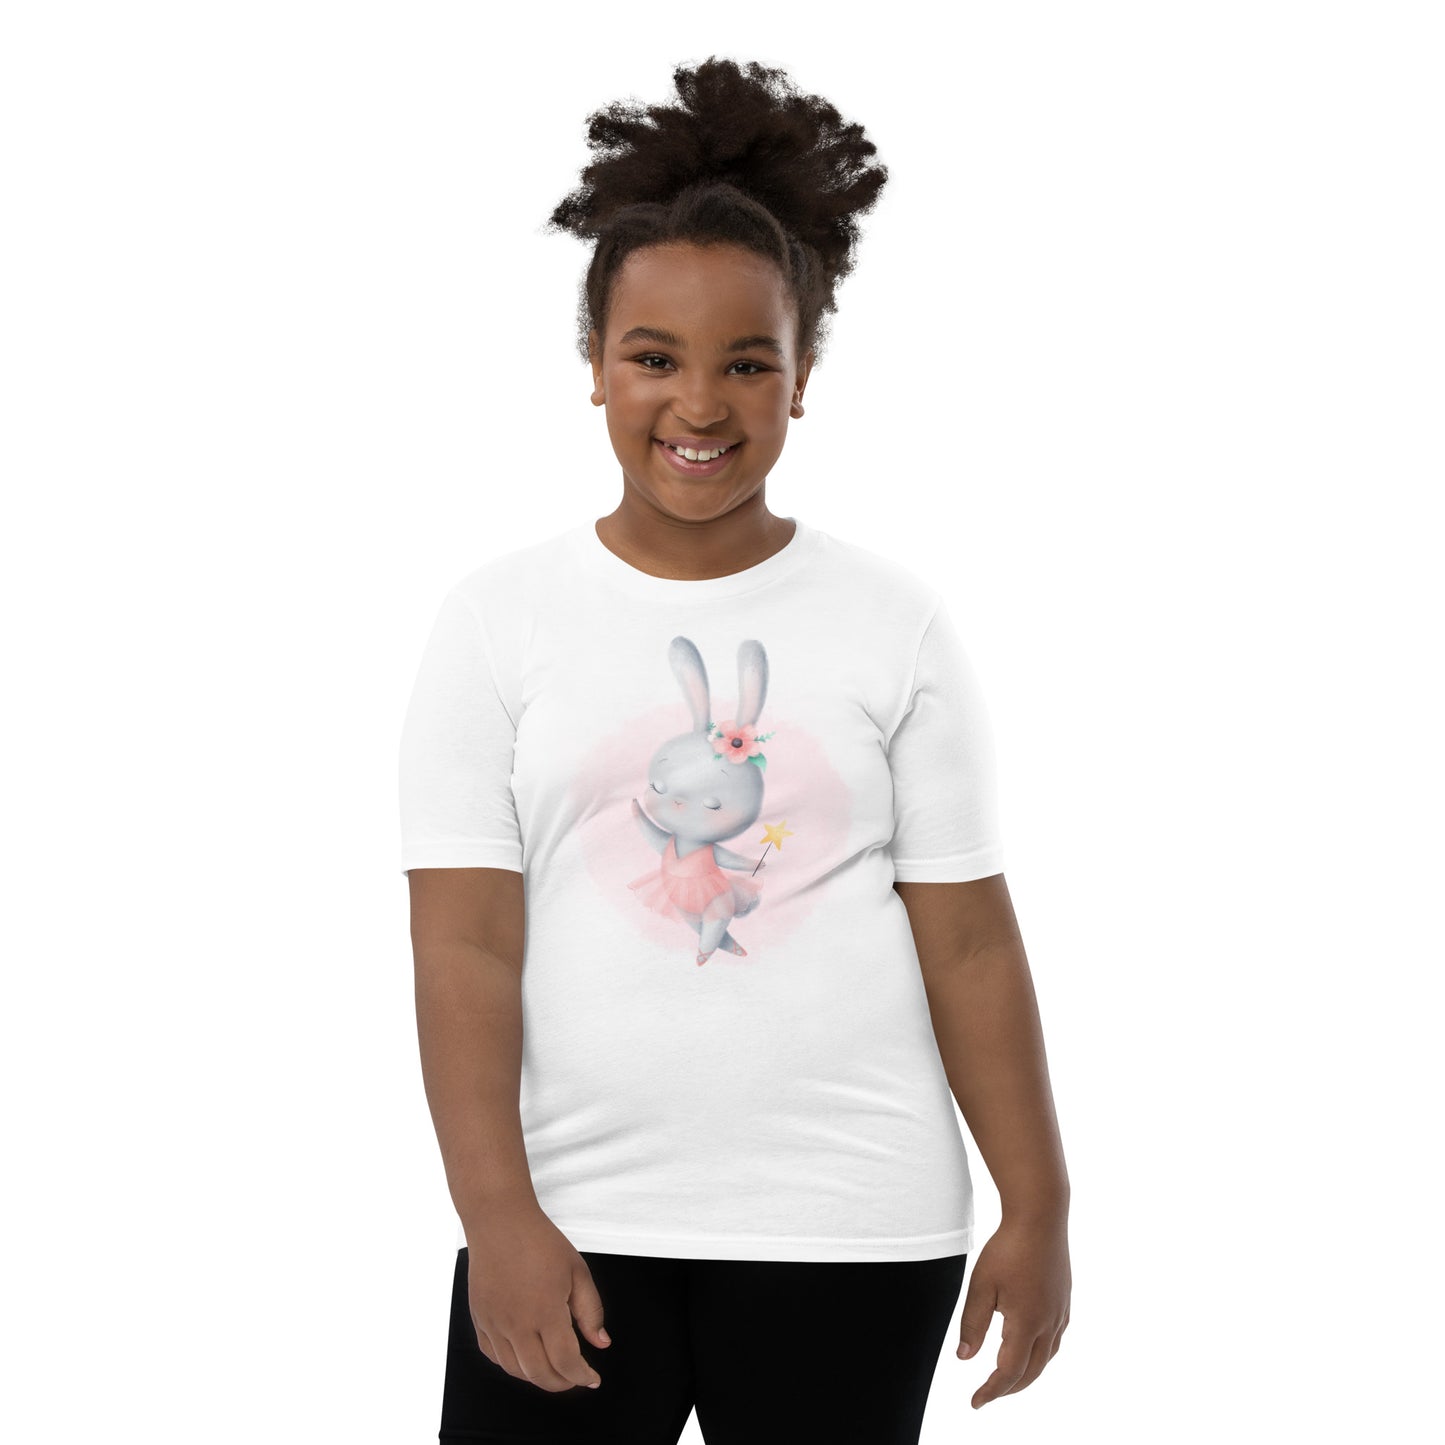 Cute Bunny | Youth Short Sleeve T-Shirt